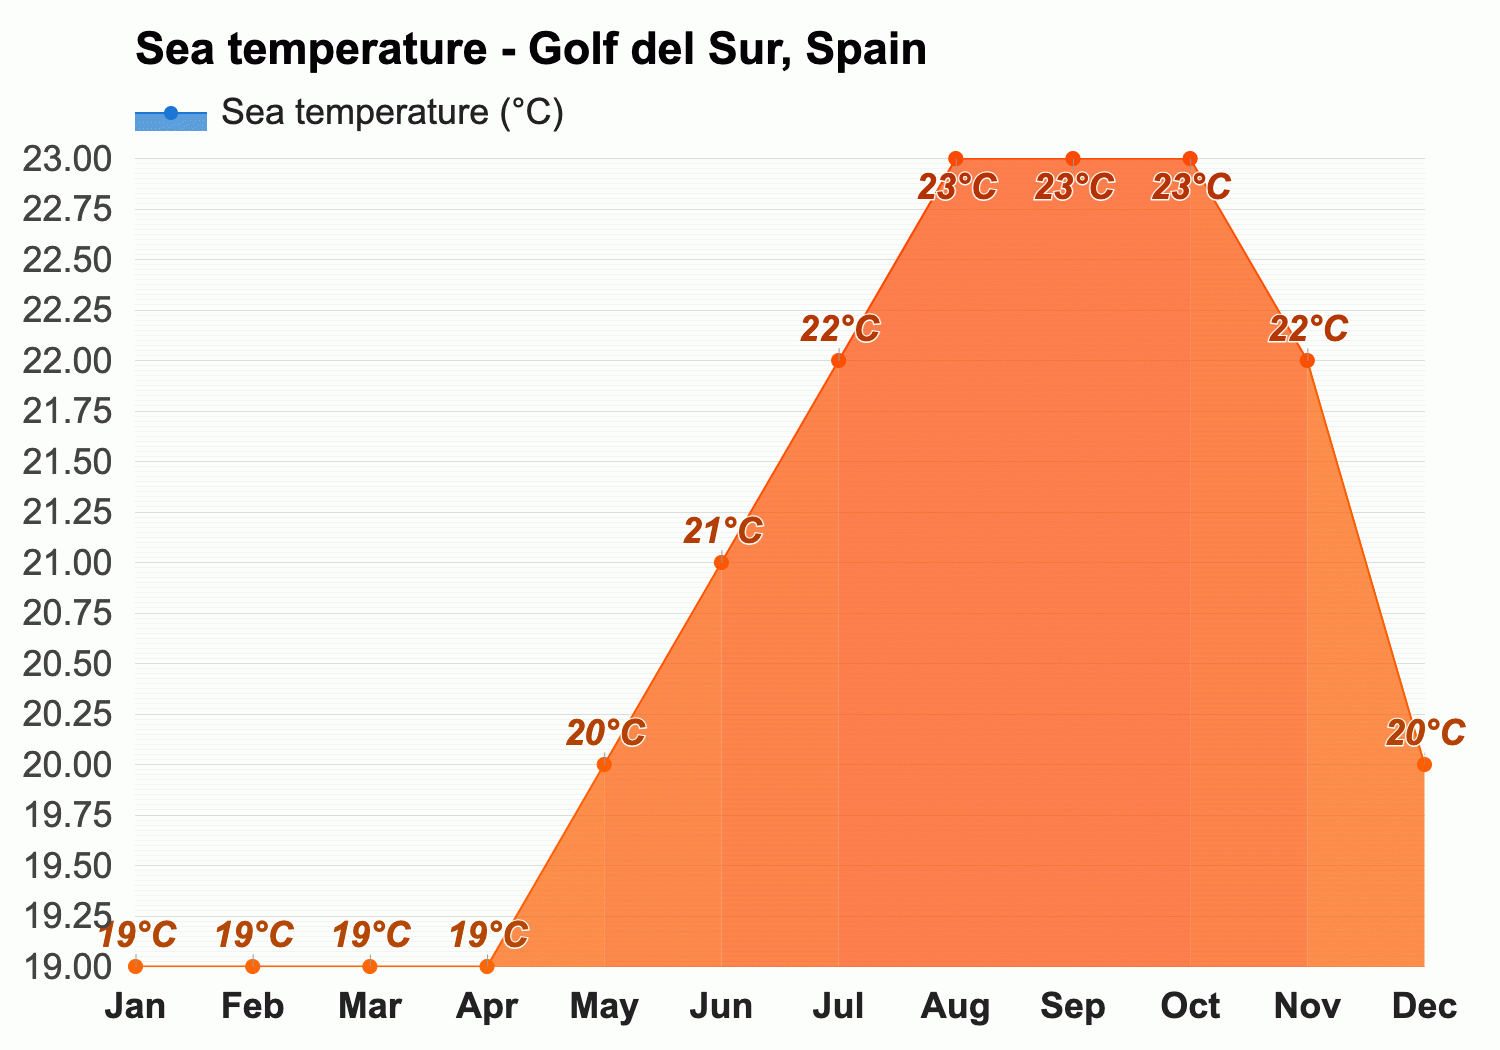 August weather - Summer 2023 - Golf del Sur, Spain